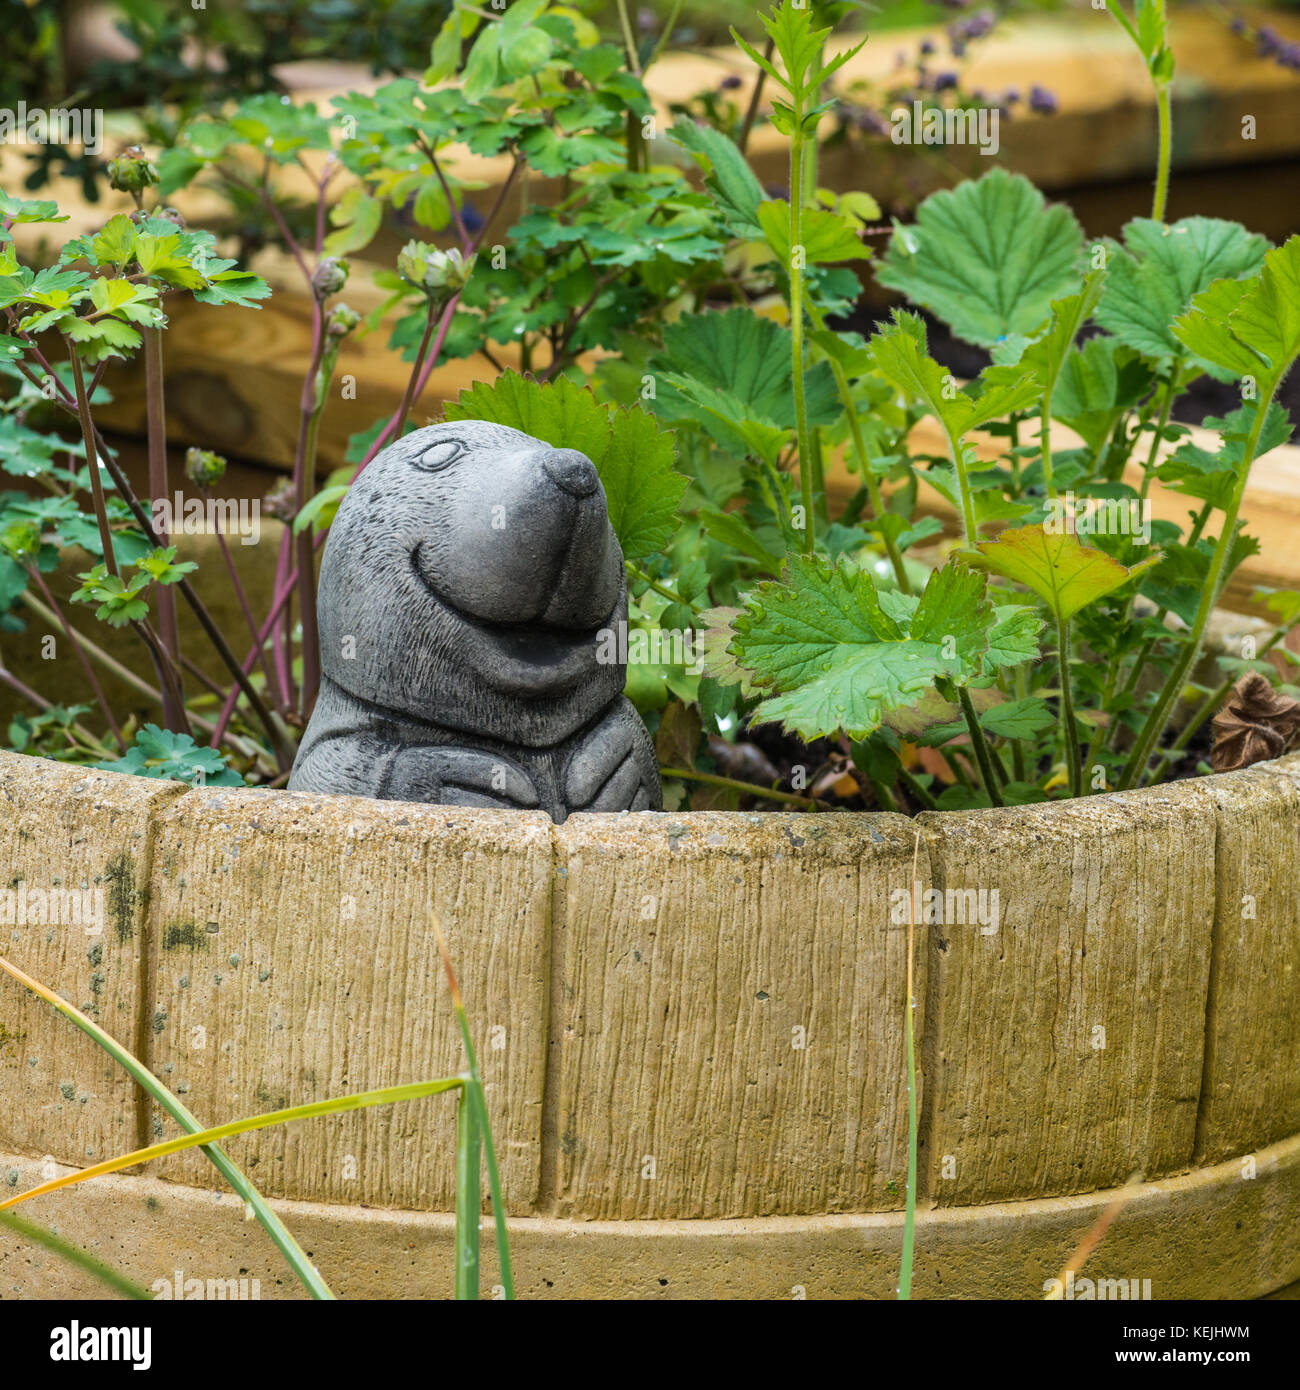 A shot of a mole garden ornament sitting in a flower pot. Stock Photo